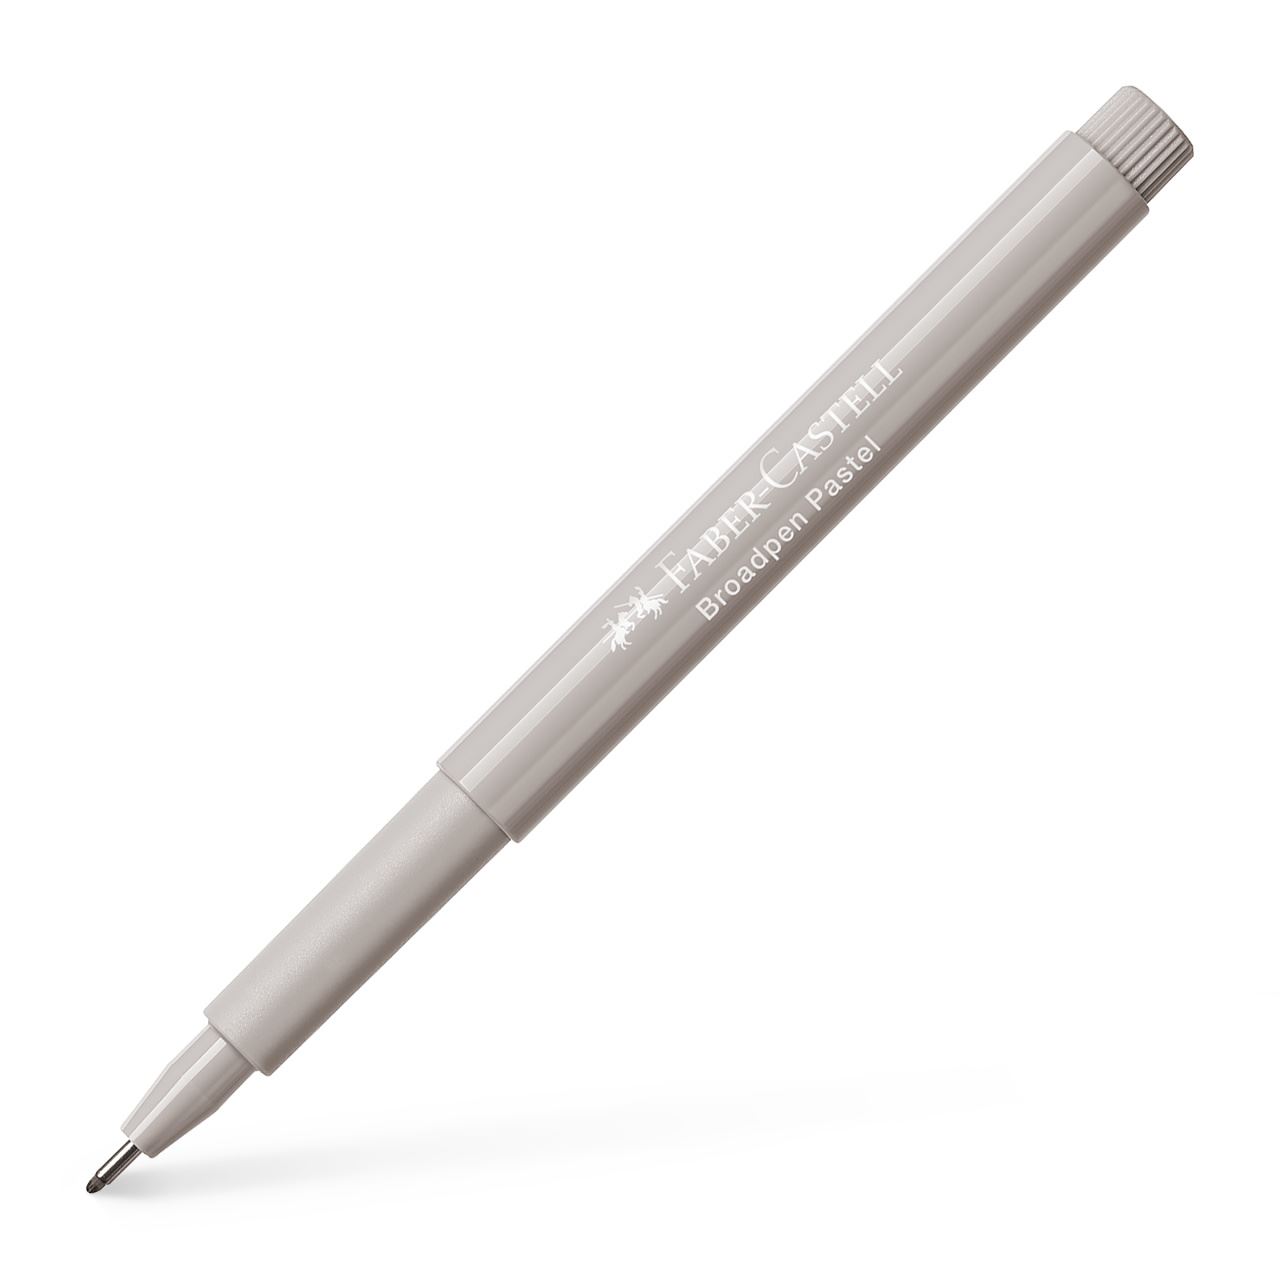 Faber-Castell - Fibre tip pen Broadpen pastel grey